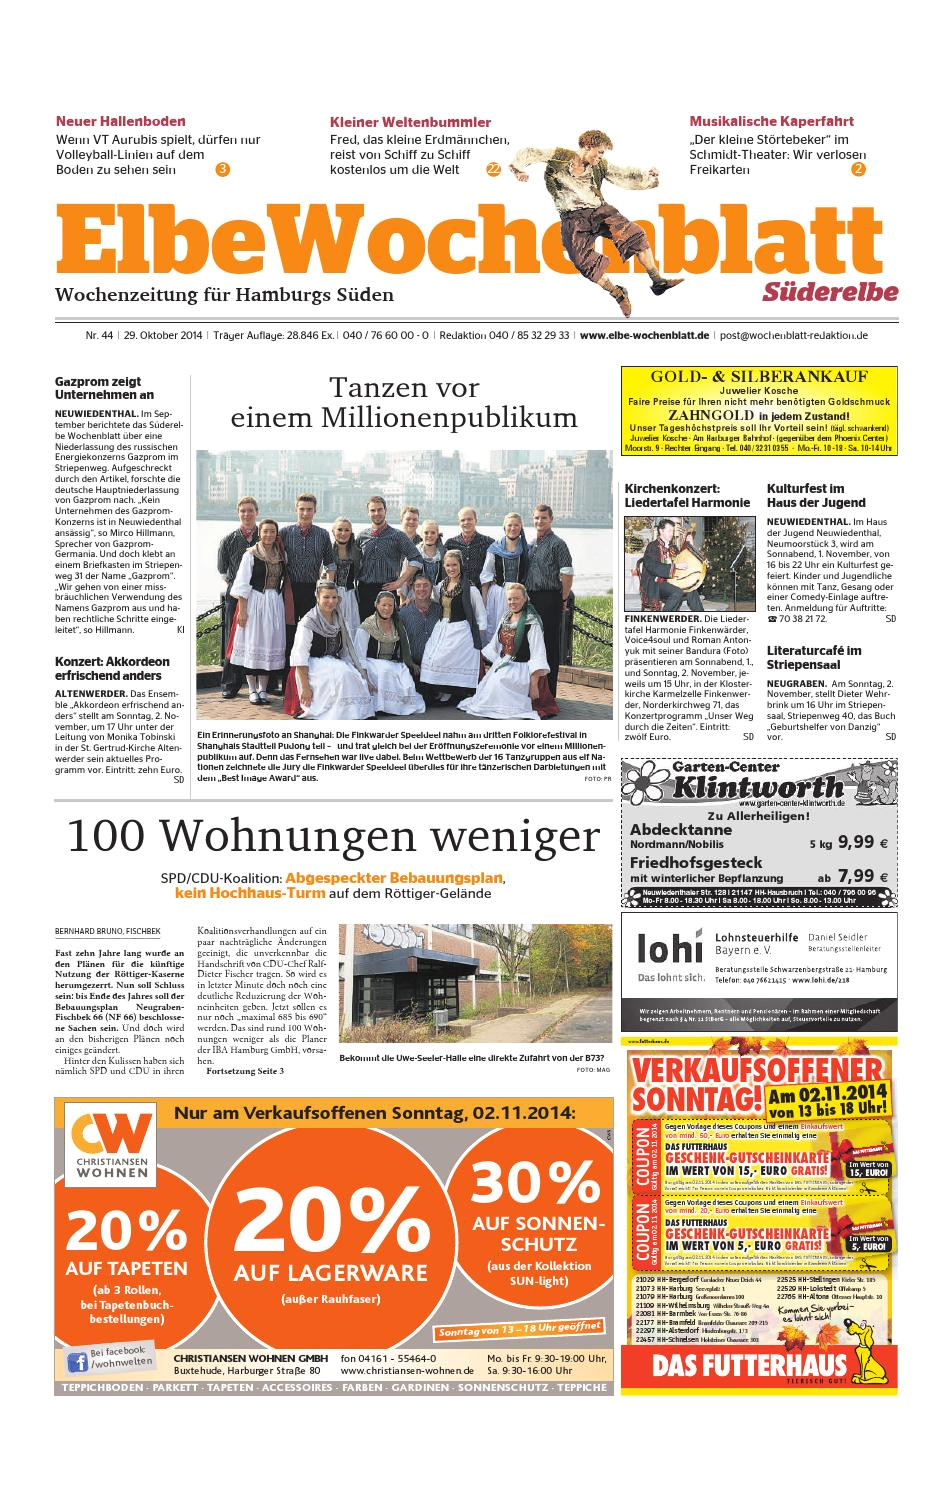 suderelbe kw44 2014 by elbe wochenblatt verlagsgesellschaft mbh co kg issuu